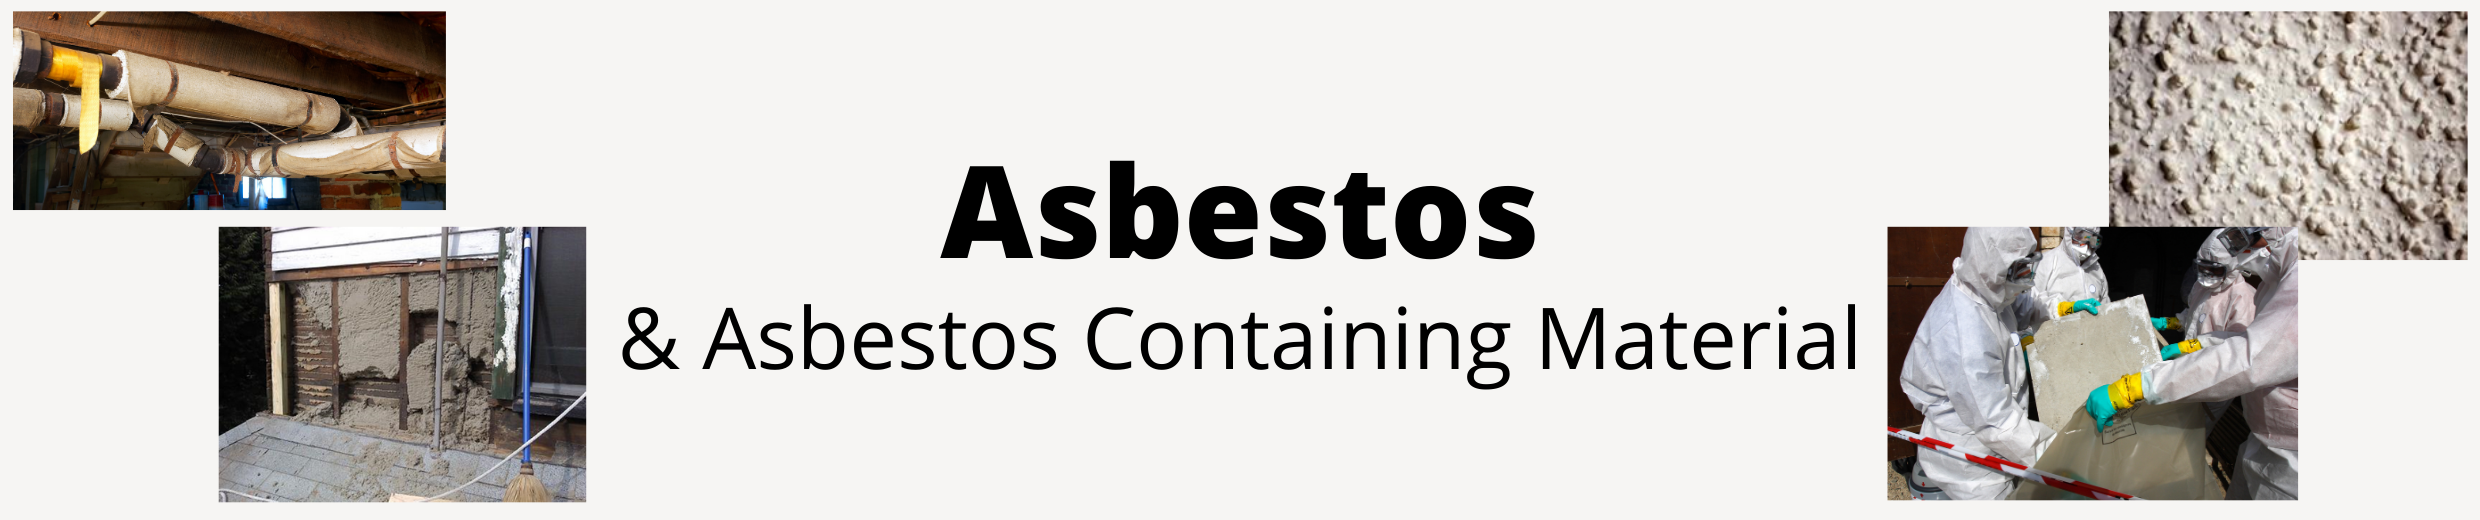 Asbestos and Asbestos containing material